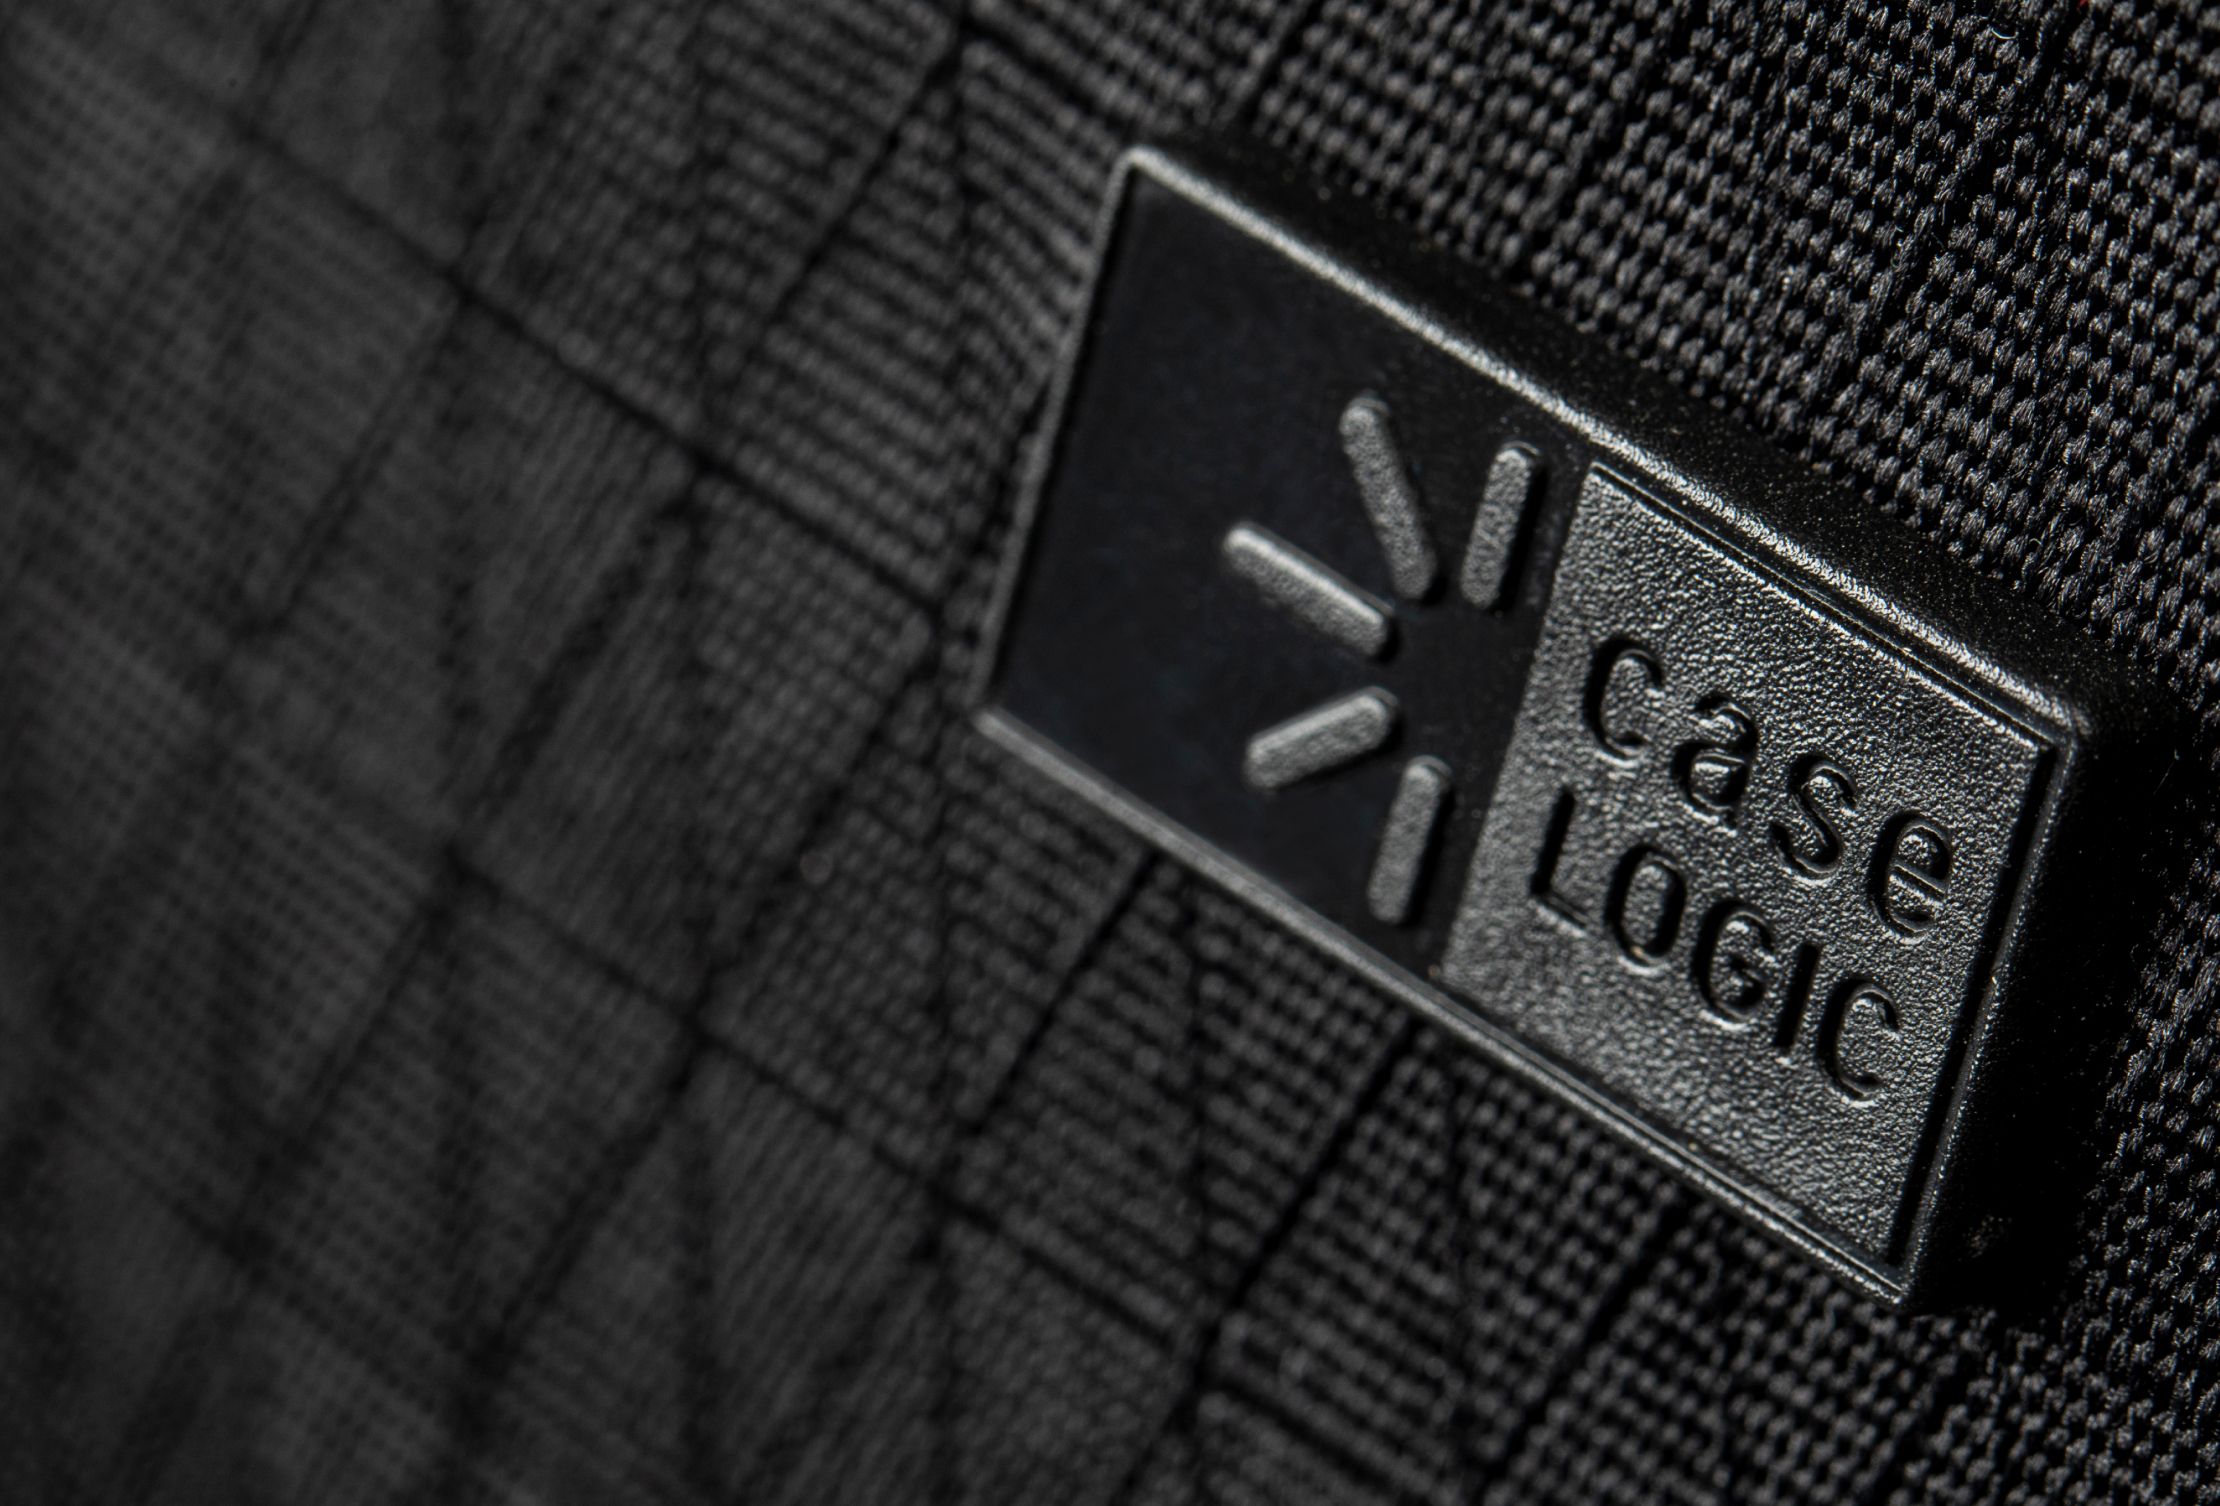 A close up of a black Case Logic bag with the Case Logic logo.